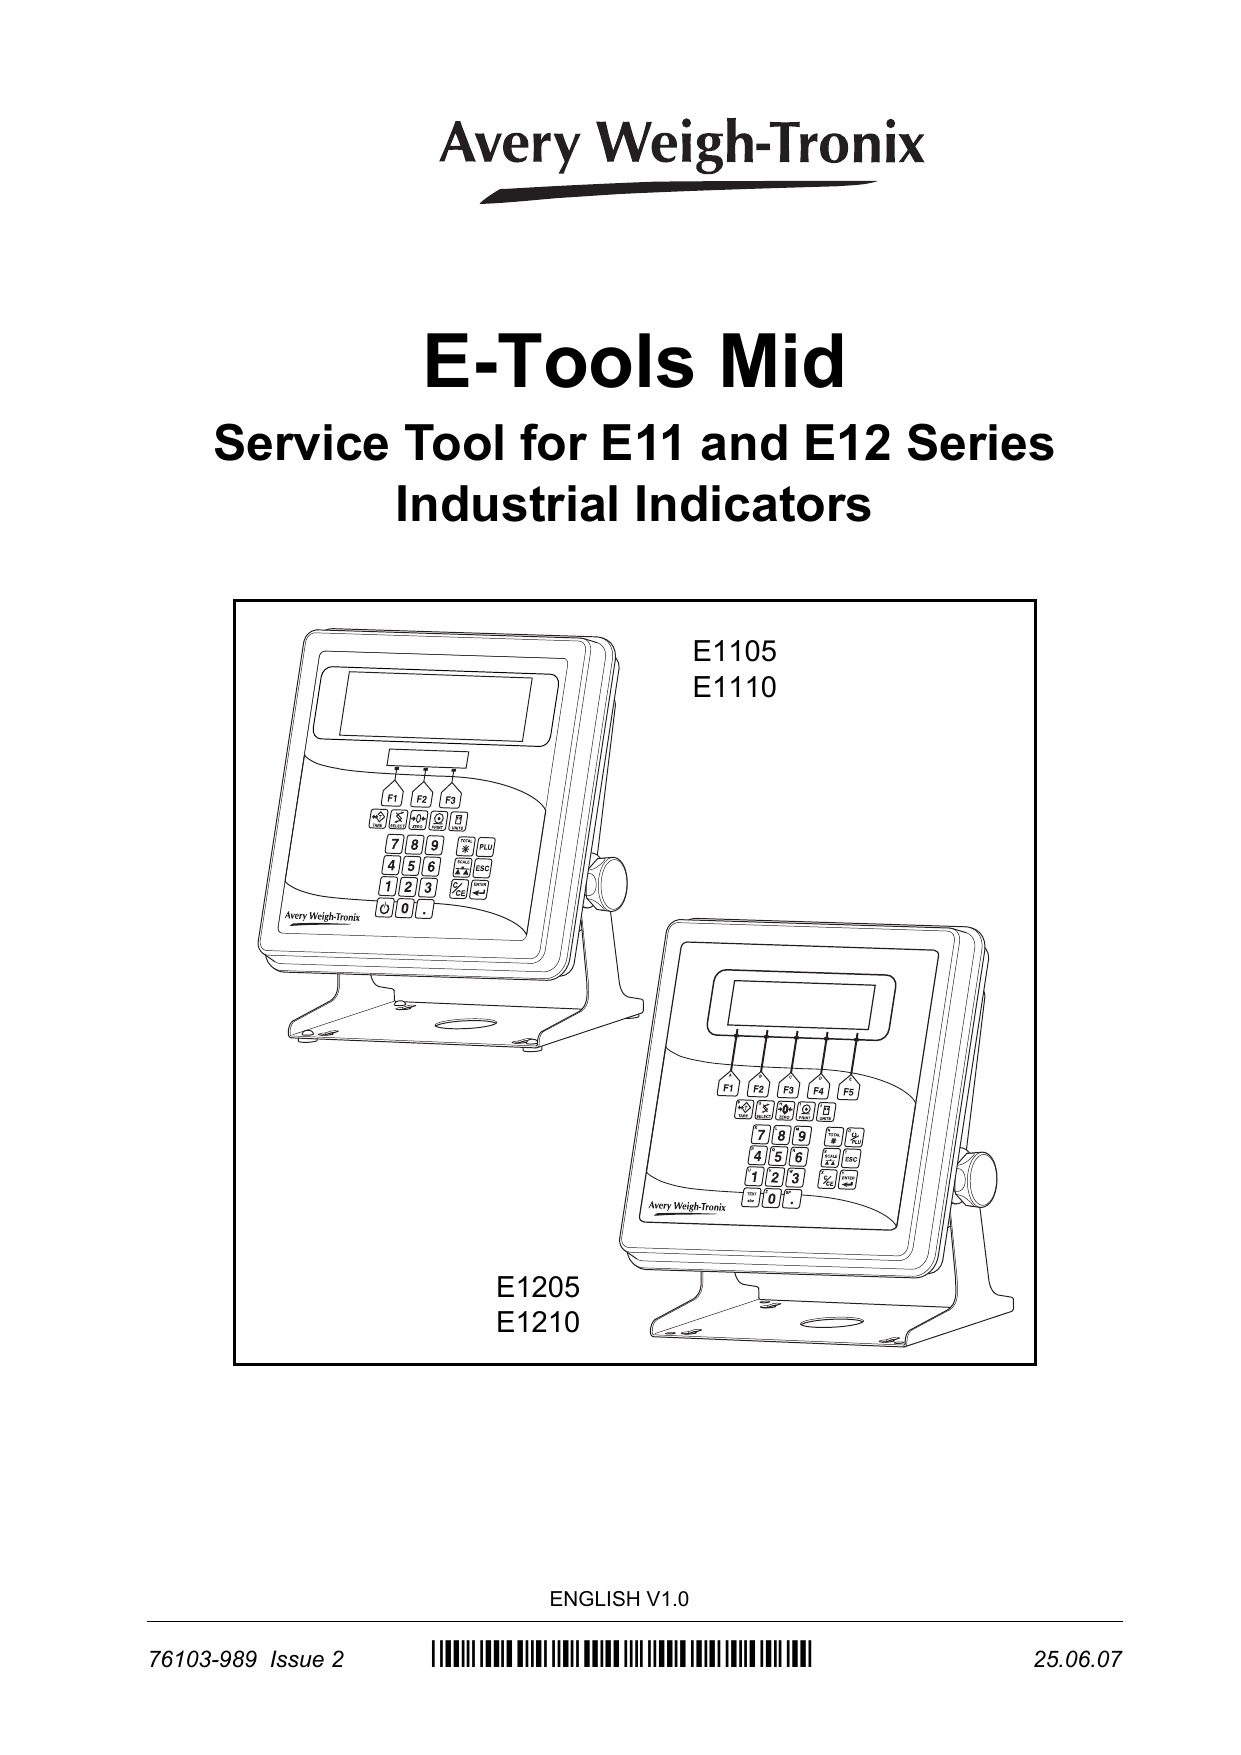 eurotel e1110 user manual